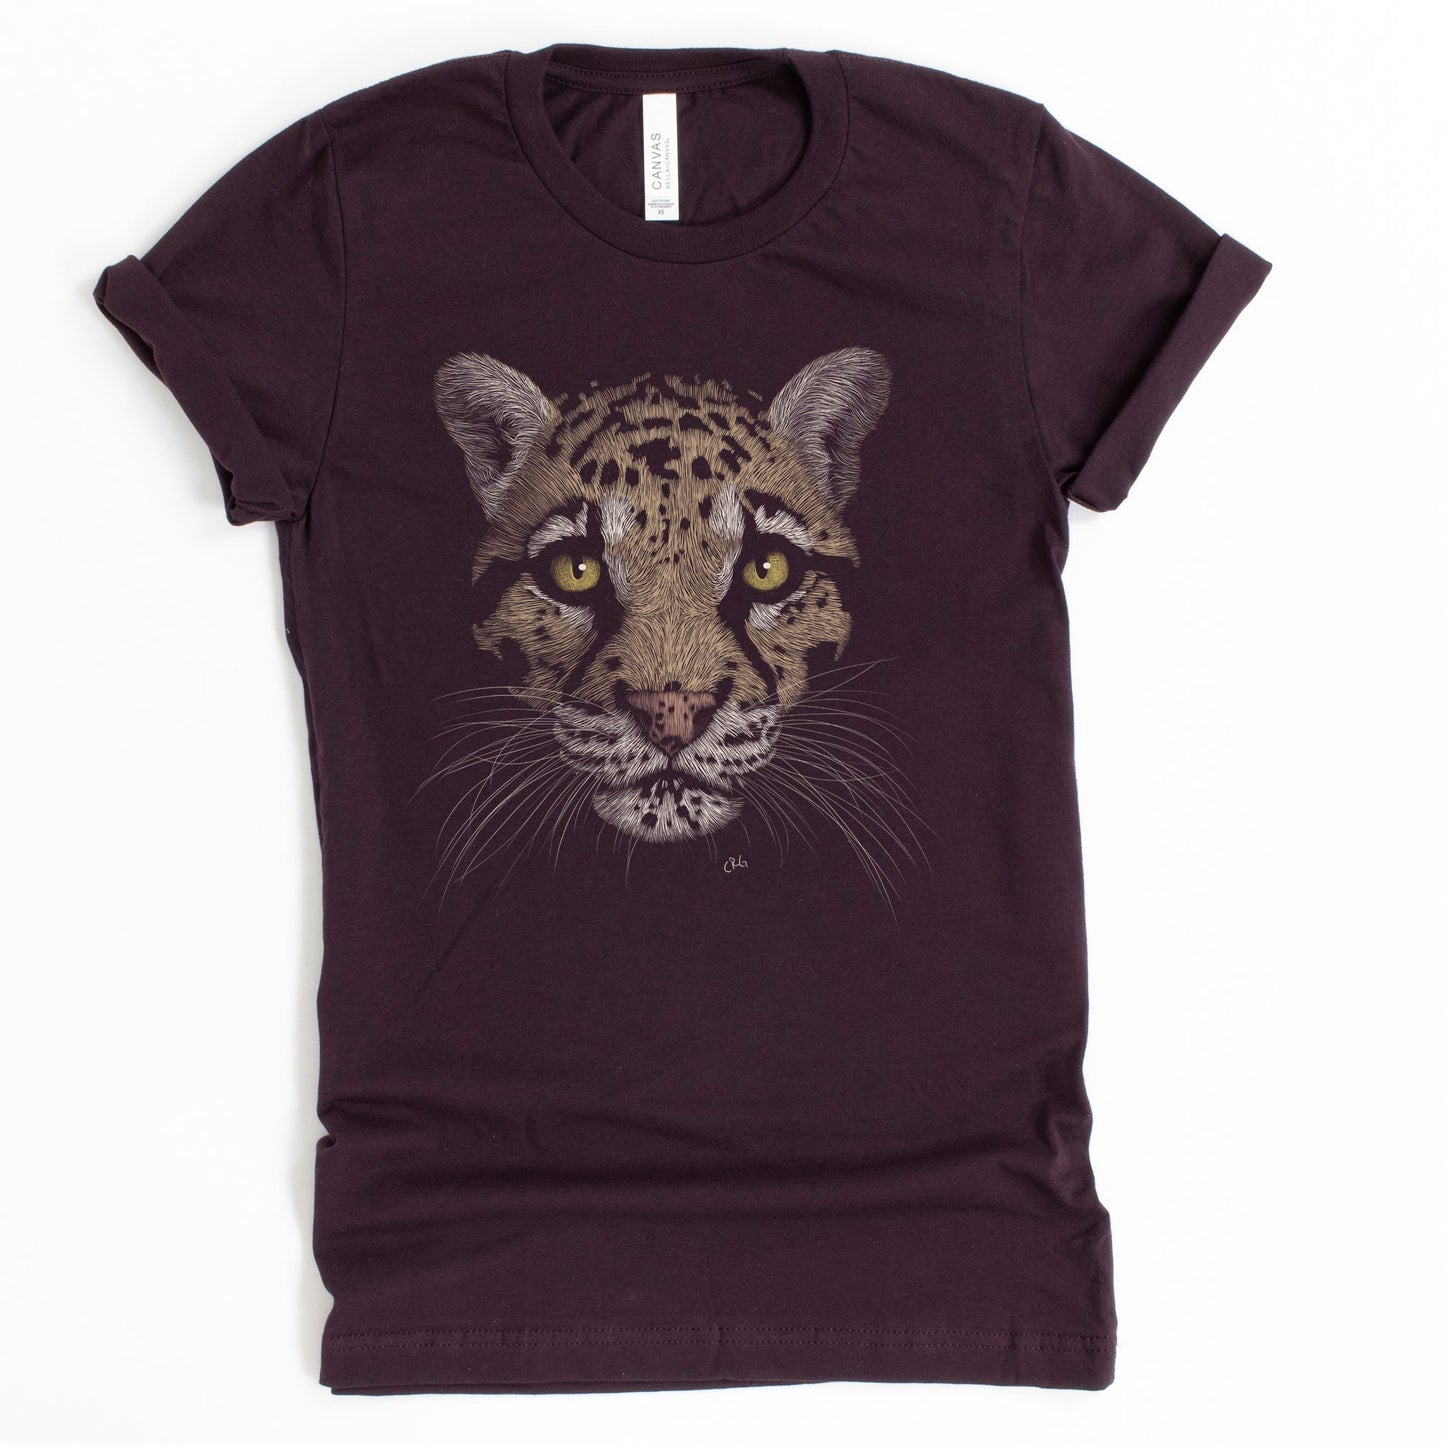 Clouded Leopard Shirt